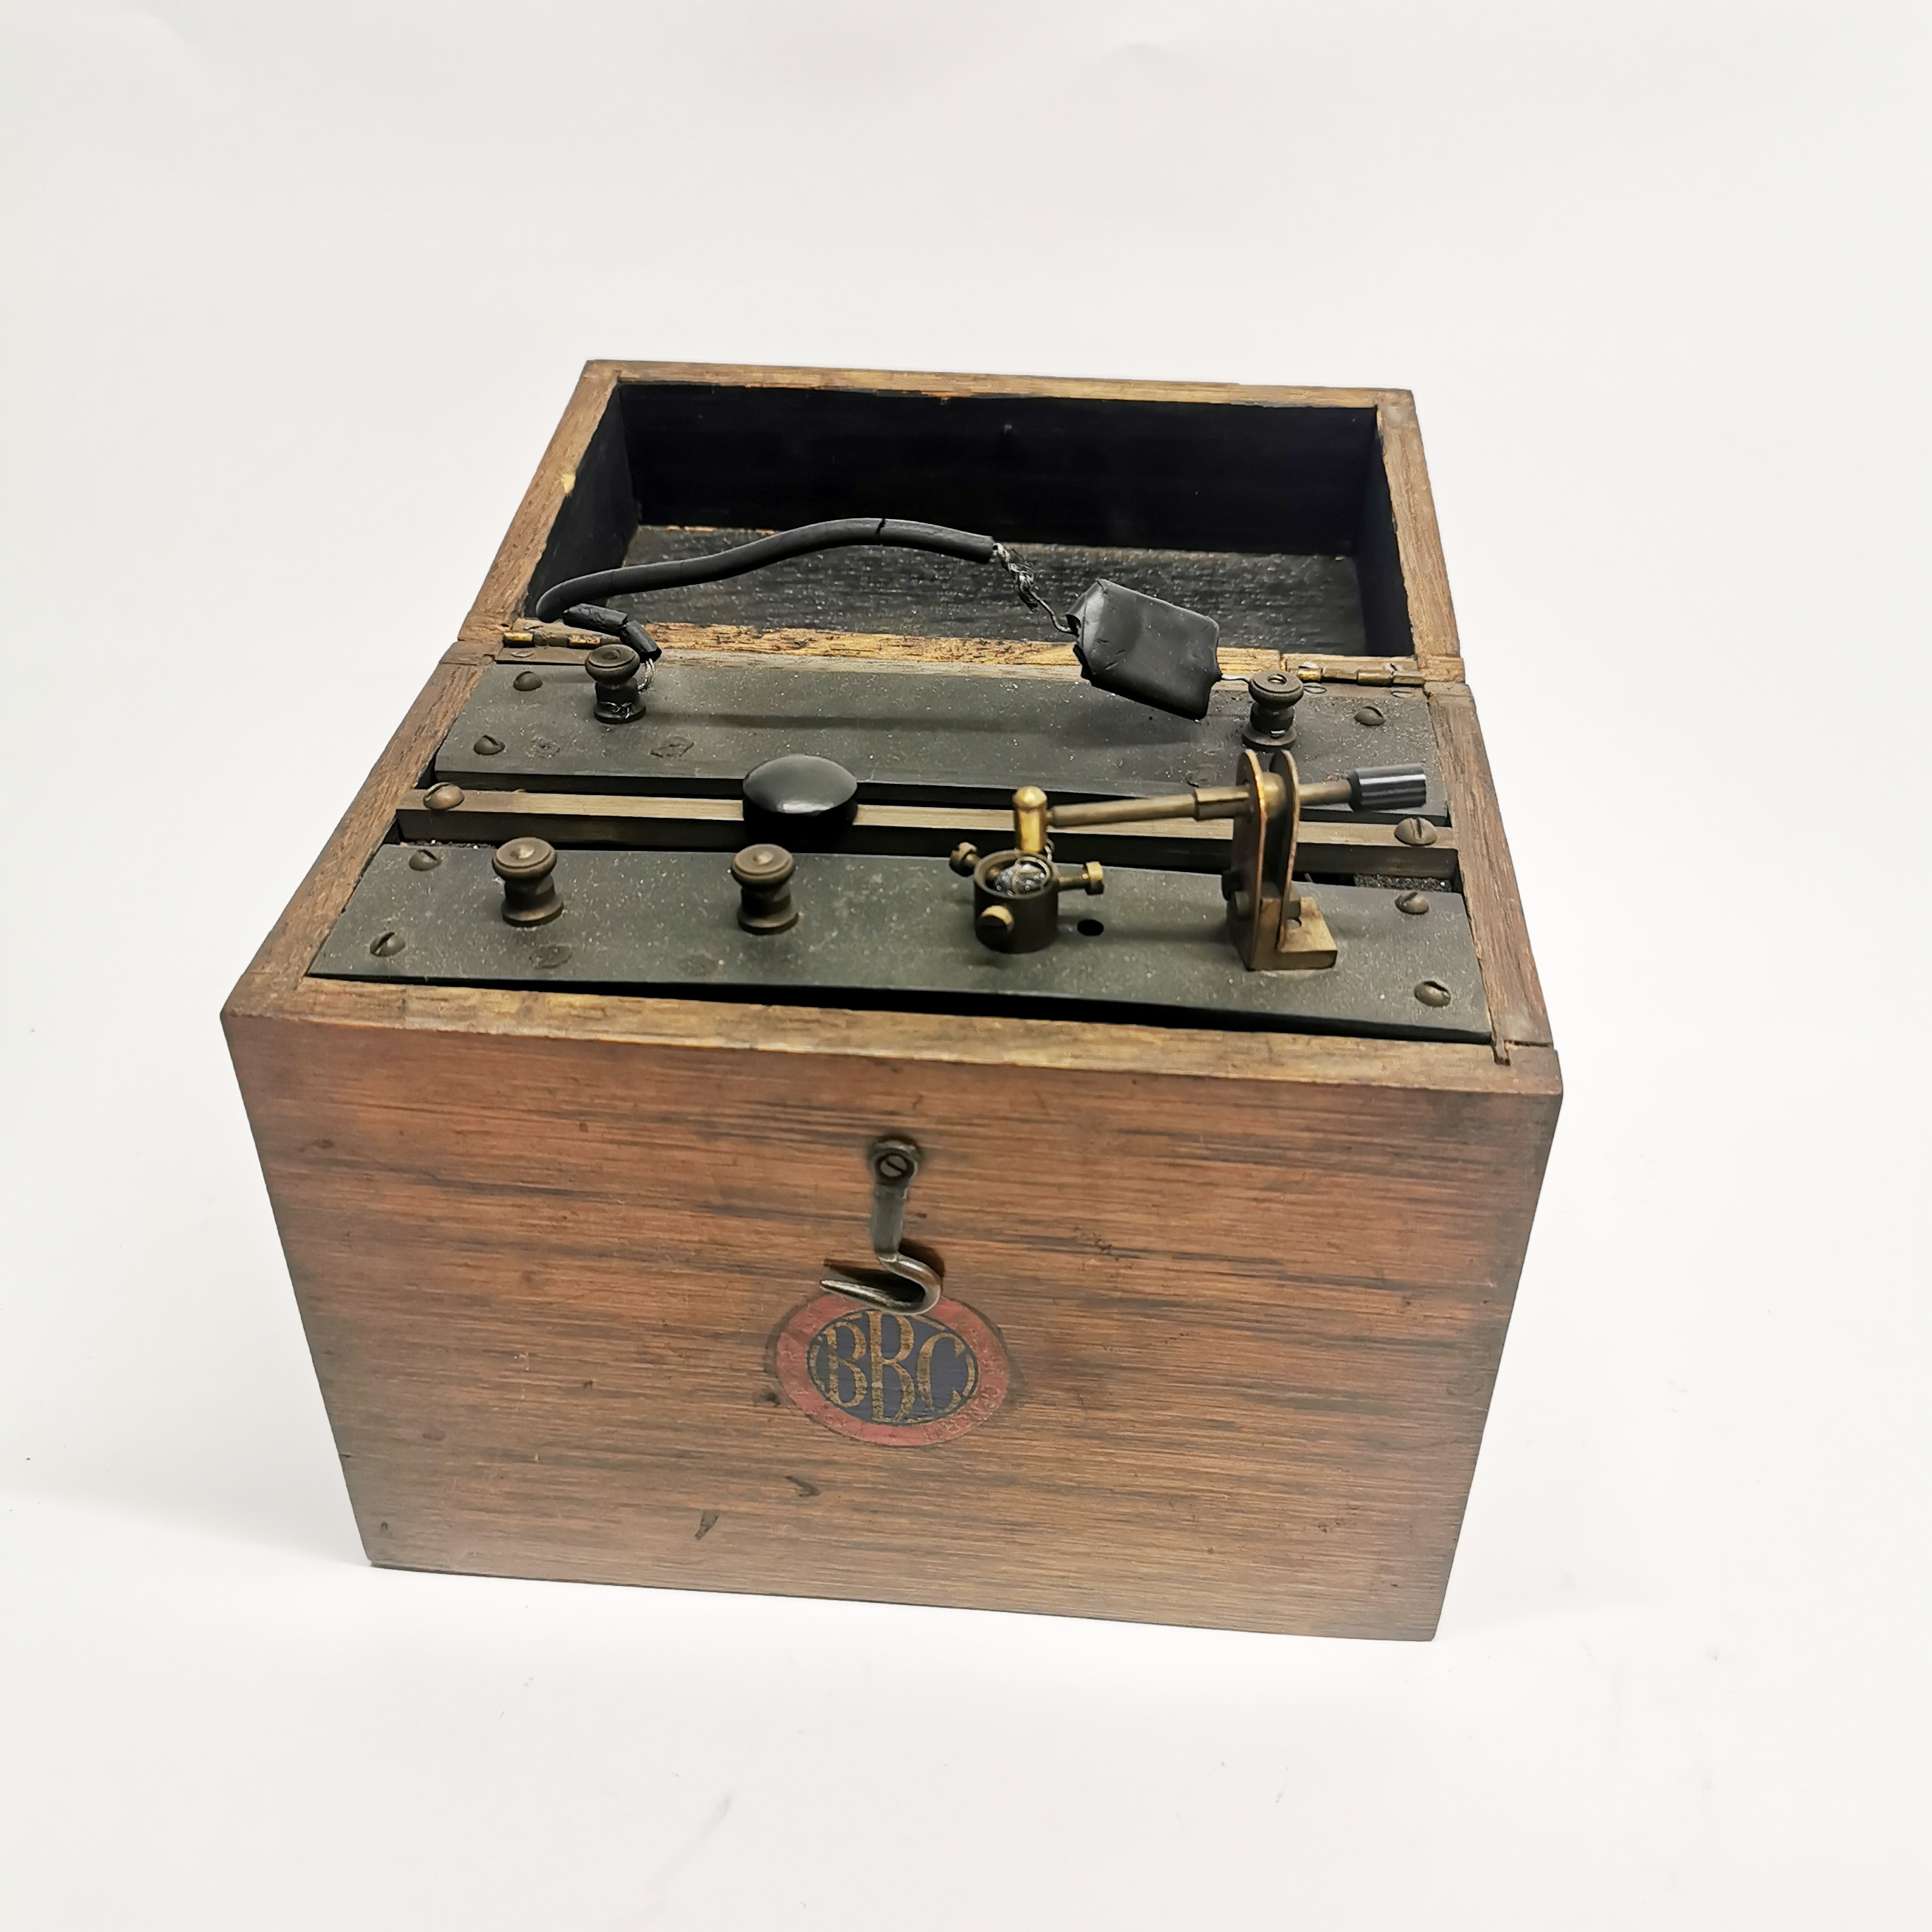 An early oak cased BBC radio receiver, 21 x 13 x 18cm.